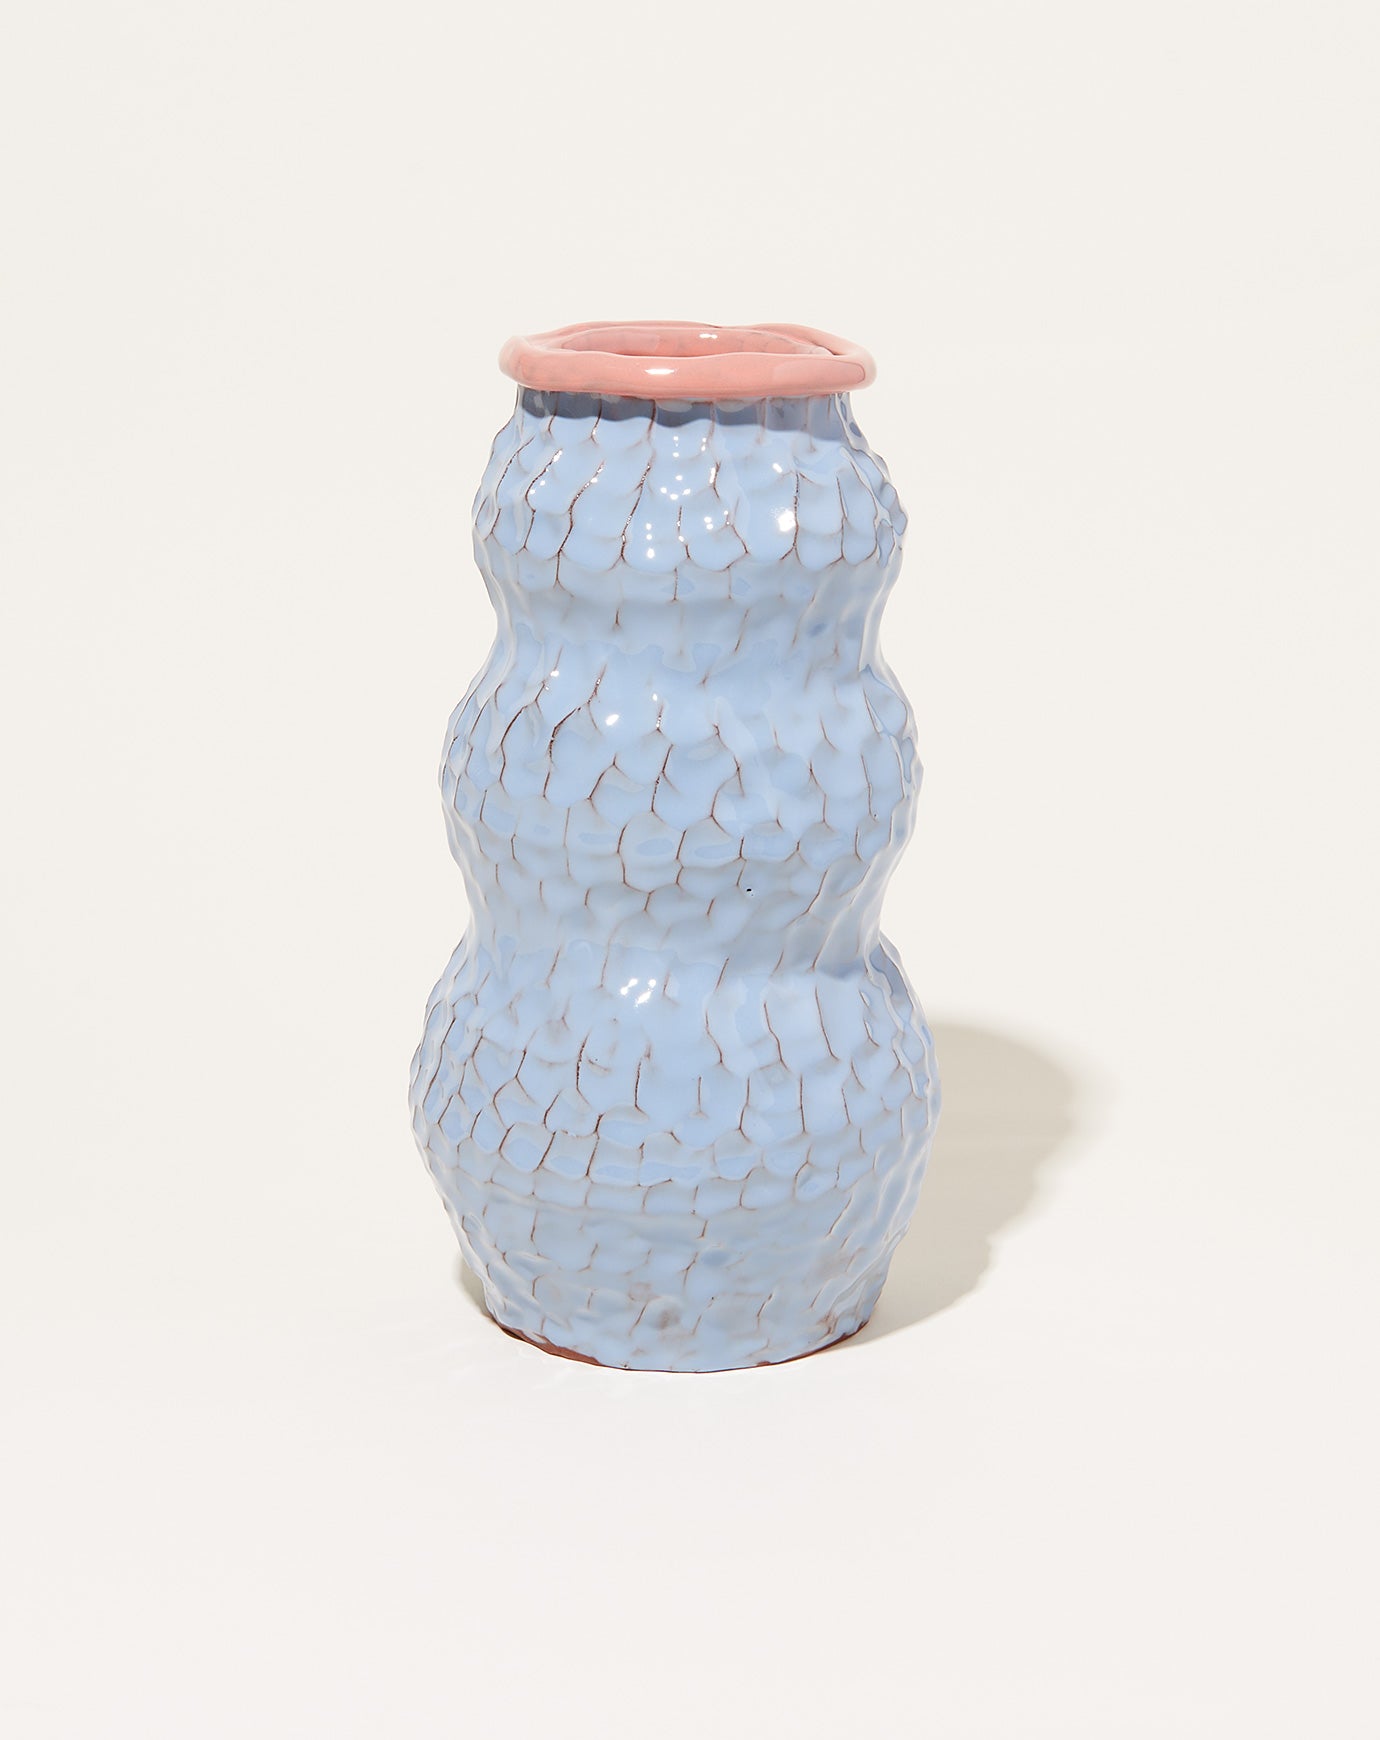 Sean Gerstley Snowman Vase in Denim and Coral